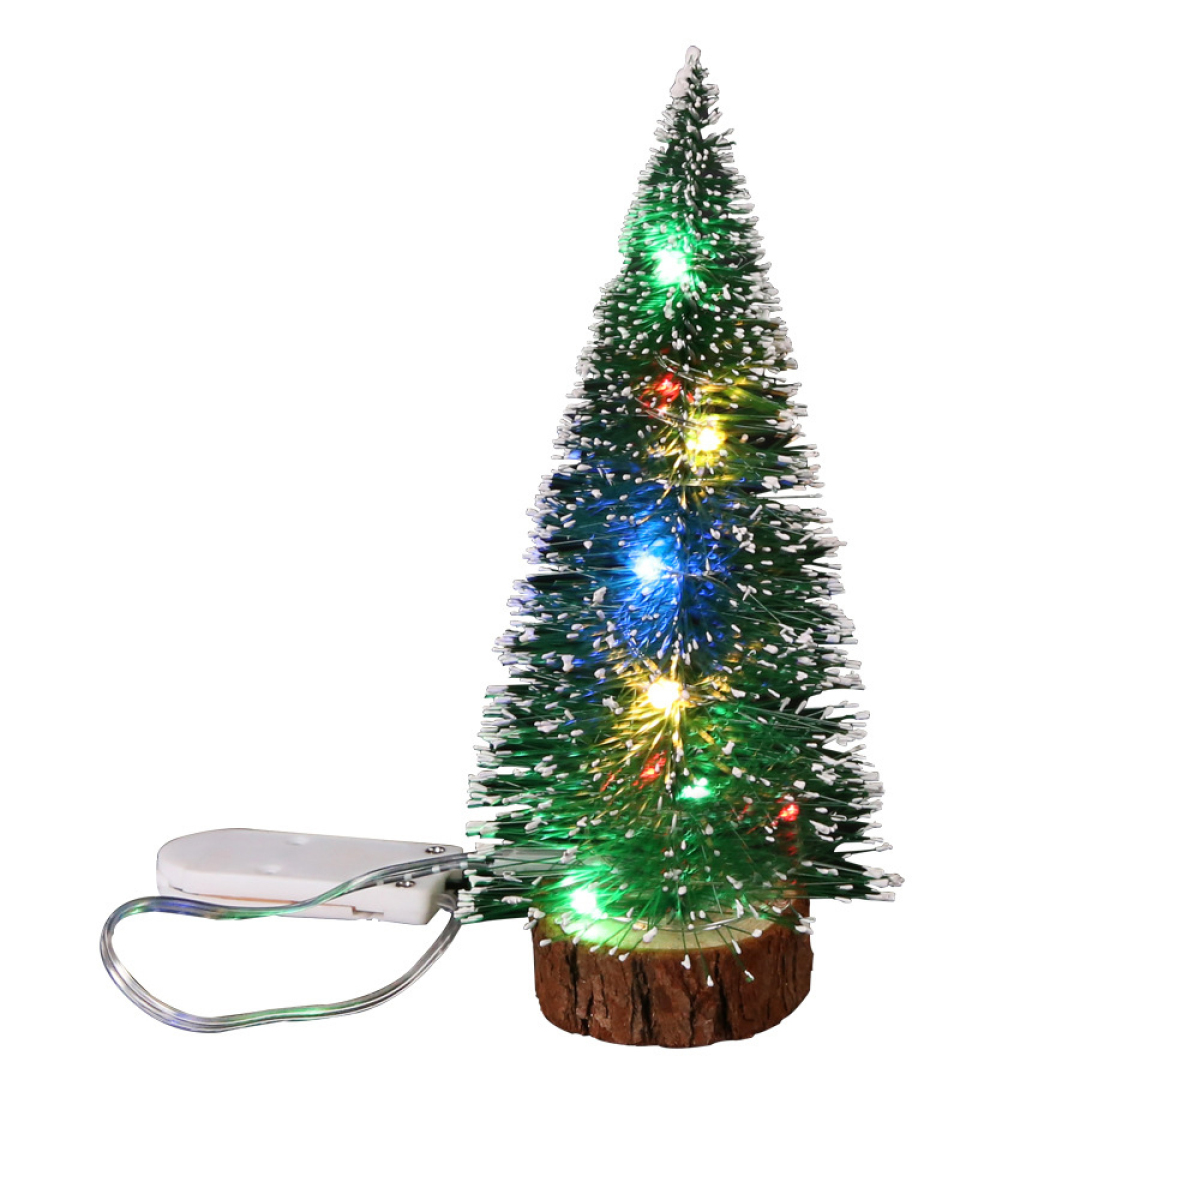 COZEVDNT Small Pine Grün. Decor Trees Christmas - Holiday Party Weihnachtsdeko, Farbe